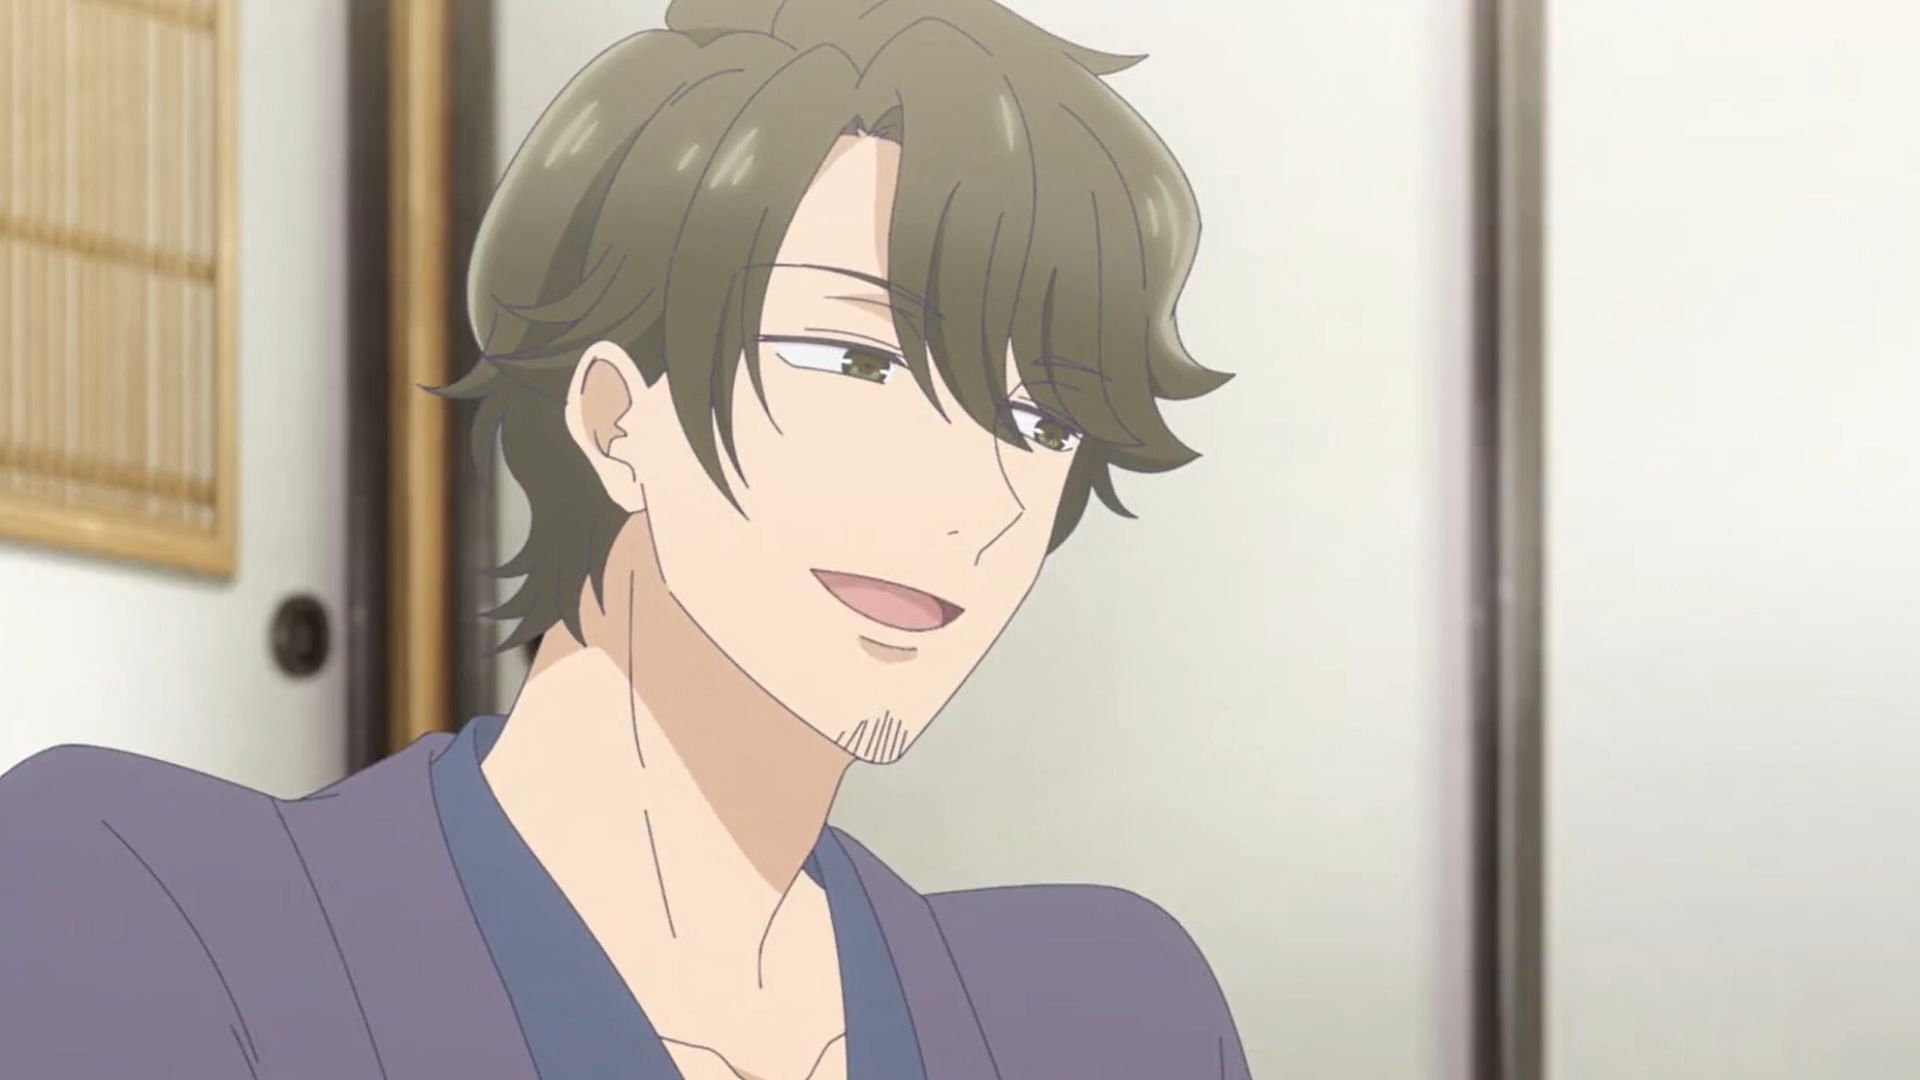 Matsuo as seen in the anime (Image via Studio DEEN)